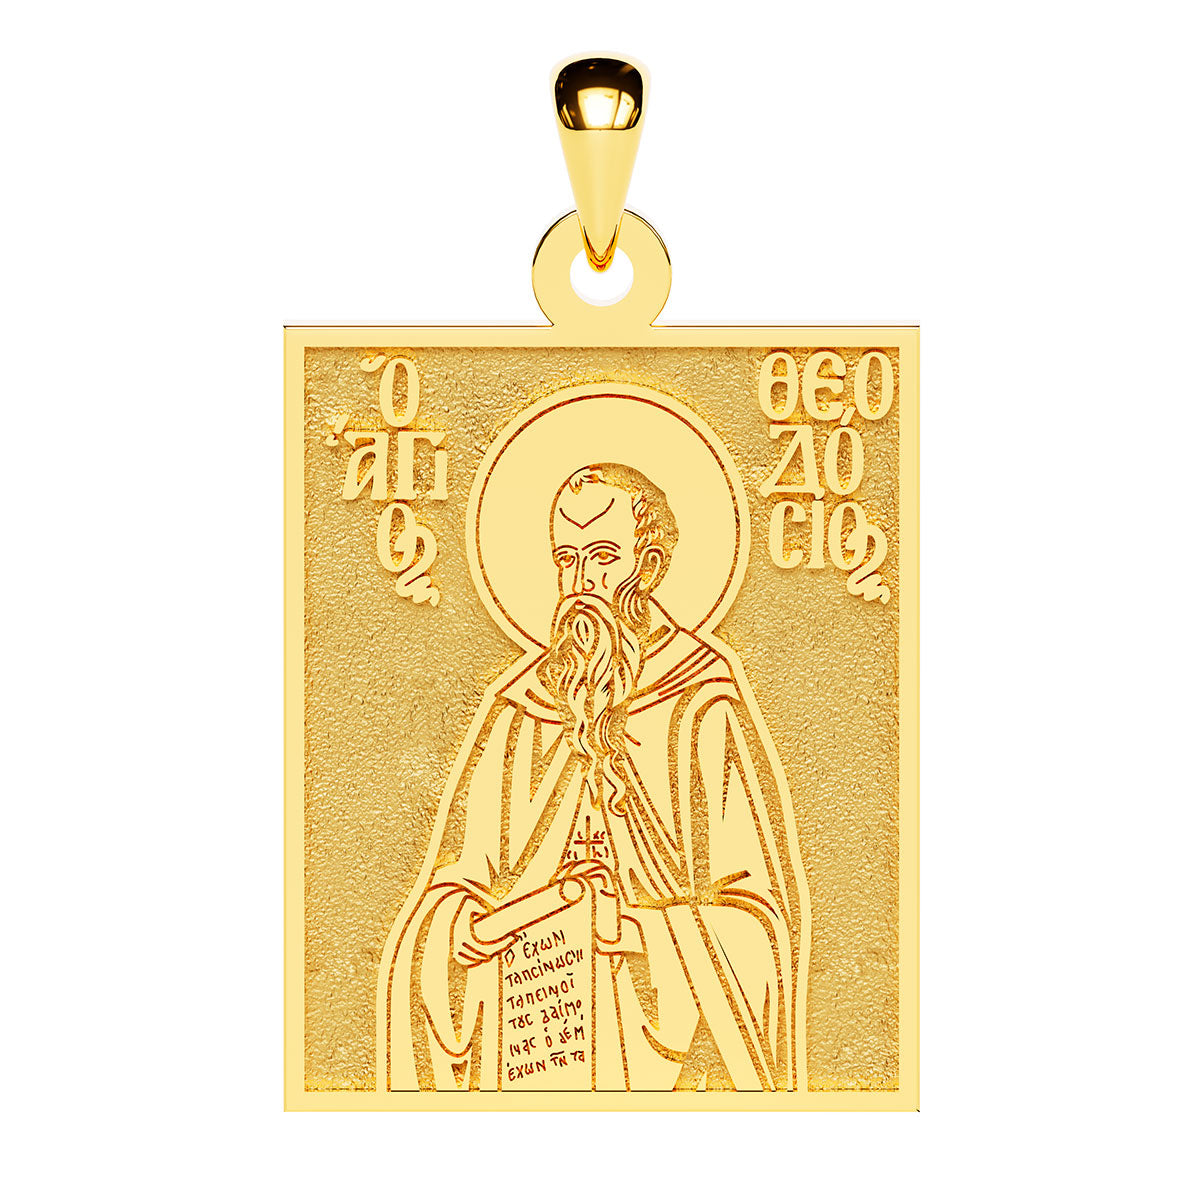 Saint Theodosius (Theodosius) the Great Greek Orthodox Icon Tag Medal